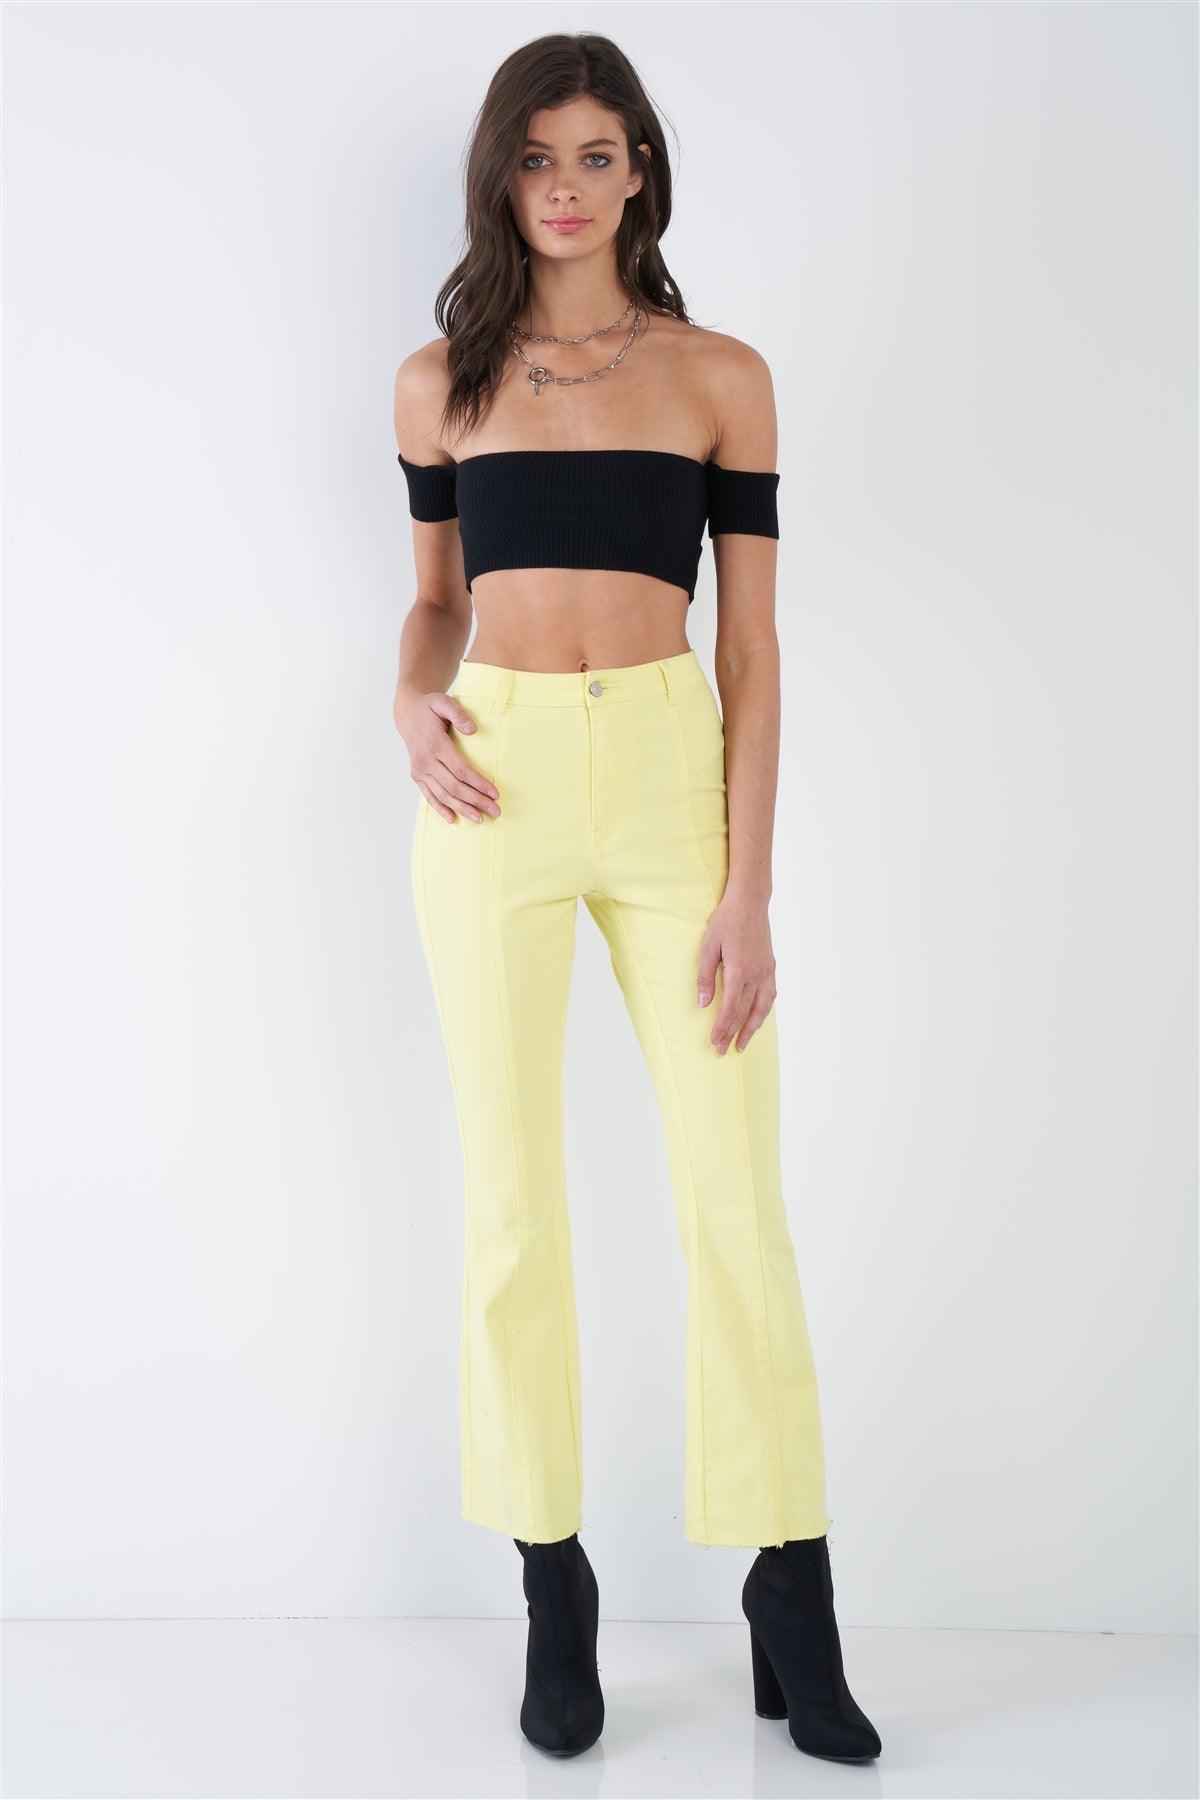 Yellow Denim Cotton Casual Front Pleat Jeans   /4-2-1